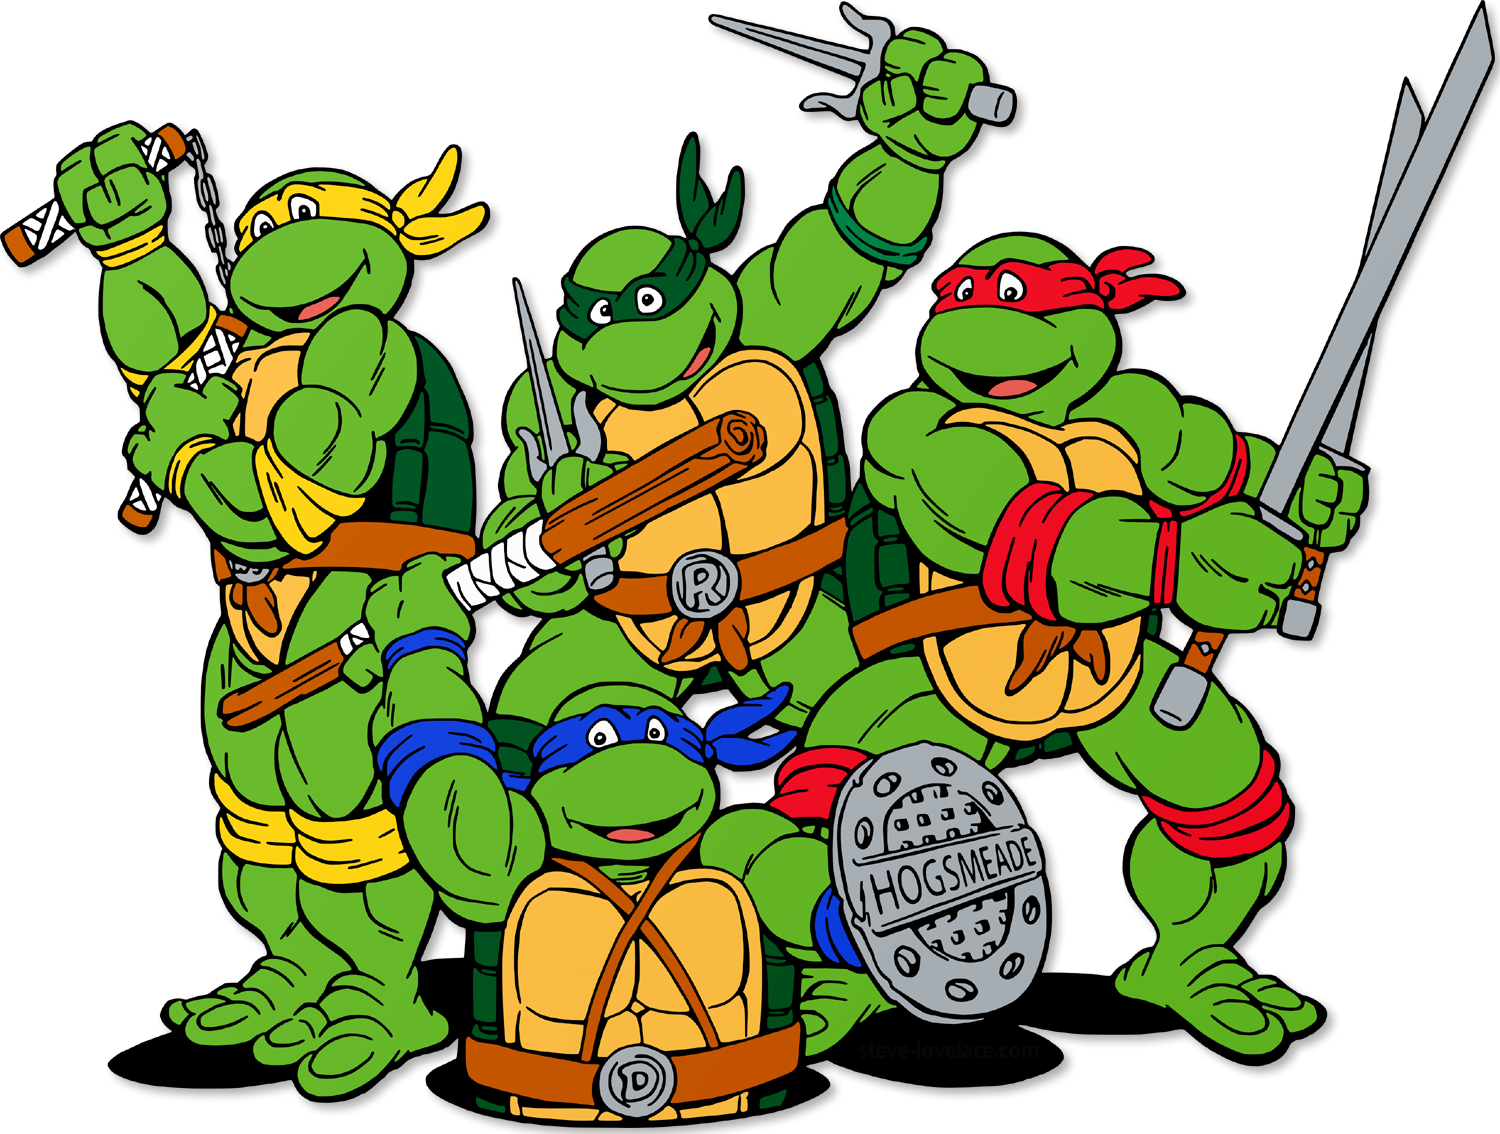 https://steve-lovelace.com/wordpress/wp-content/uploads/2013/10/teenage-mutant-ninja-turtles-in-hogwarts-colors.png